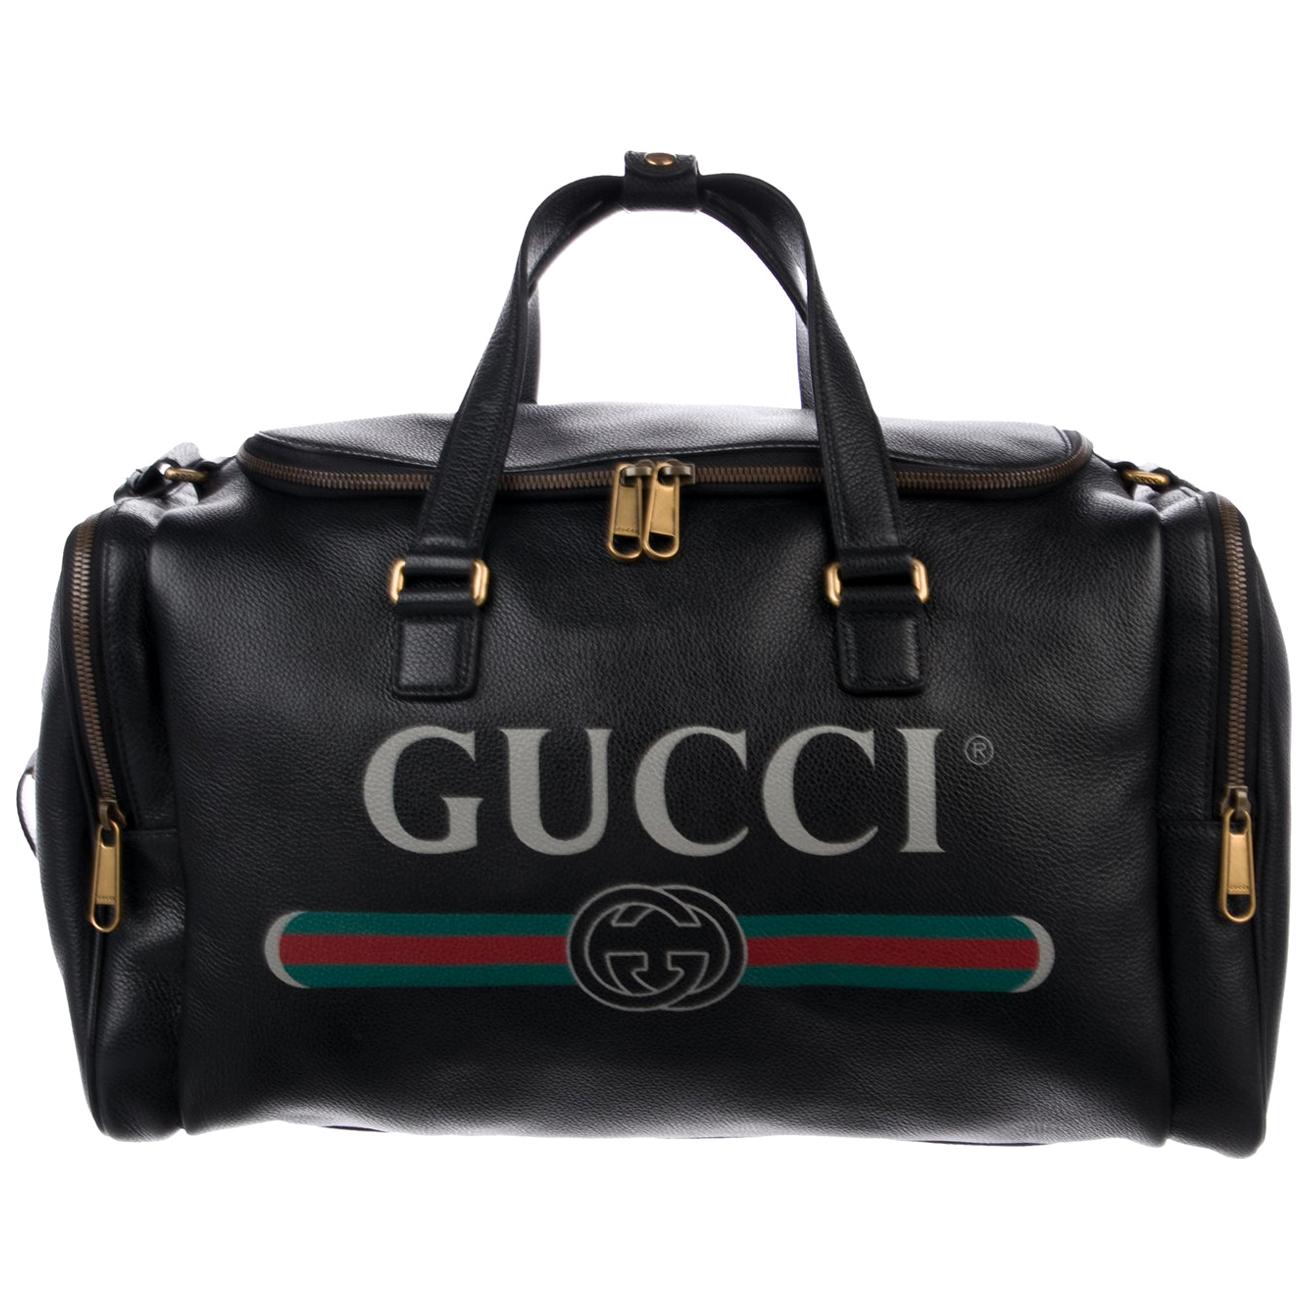 Gucci NEW Black Leather Logo Gold Duffle Weekender Tote Top Handle Satchel Bag